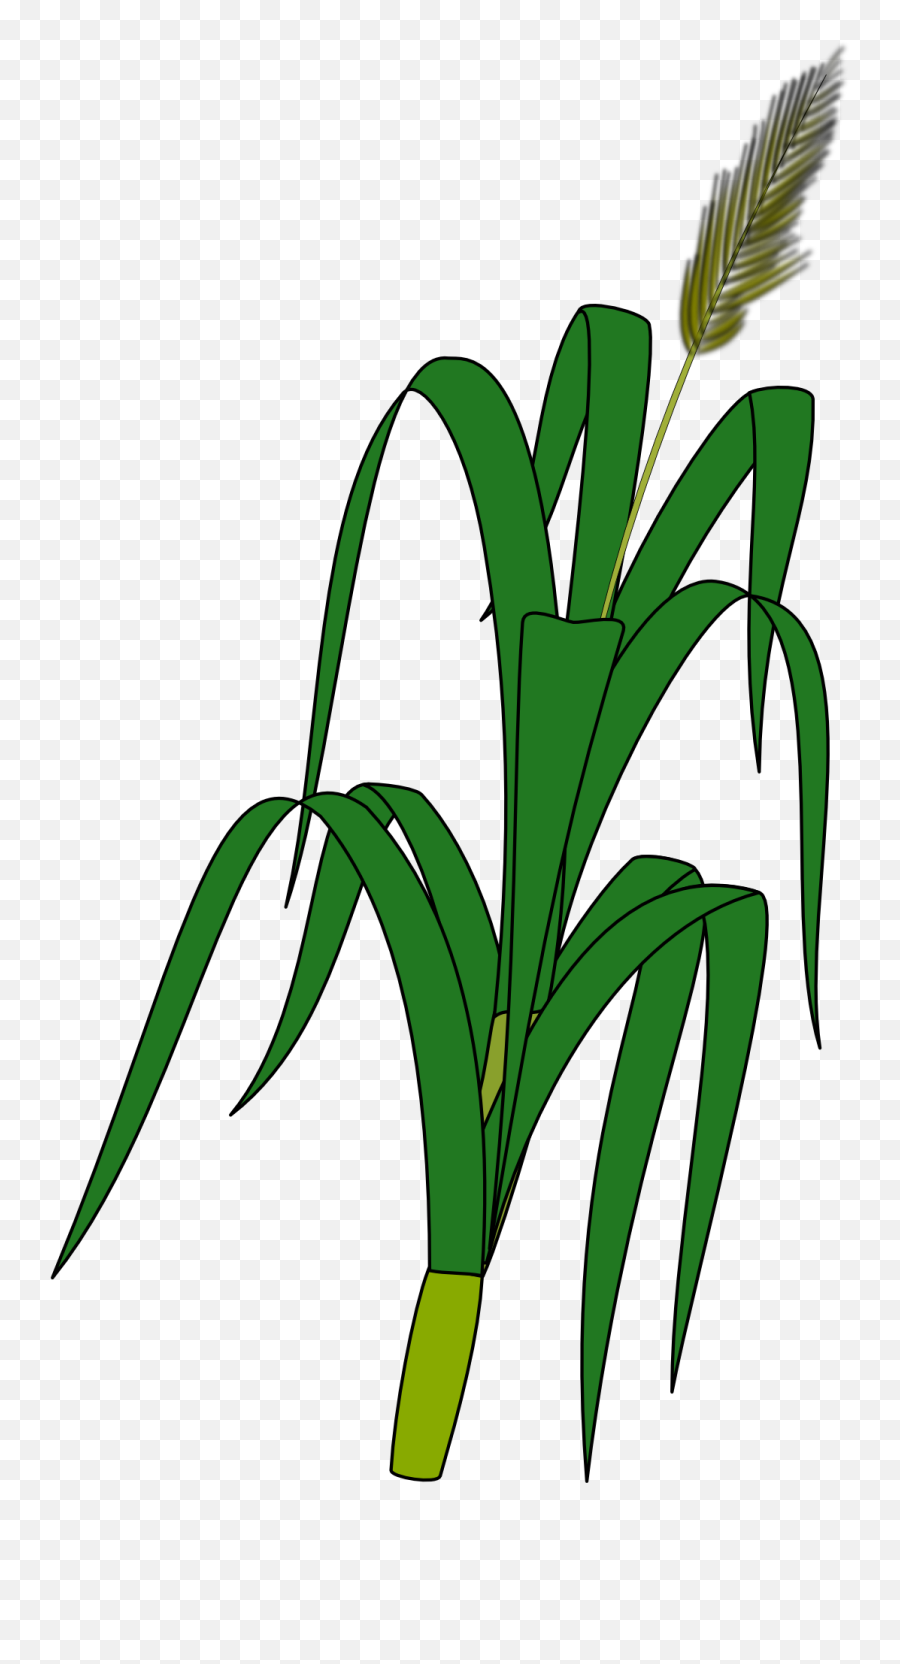 Drawn Corn Stalk Free Image - Draw A Wheat Plant Png,Corn Stalk Png